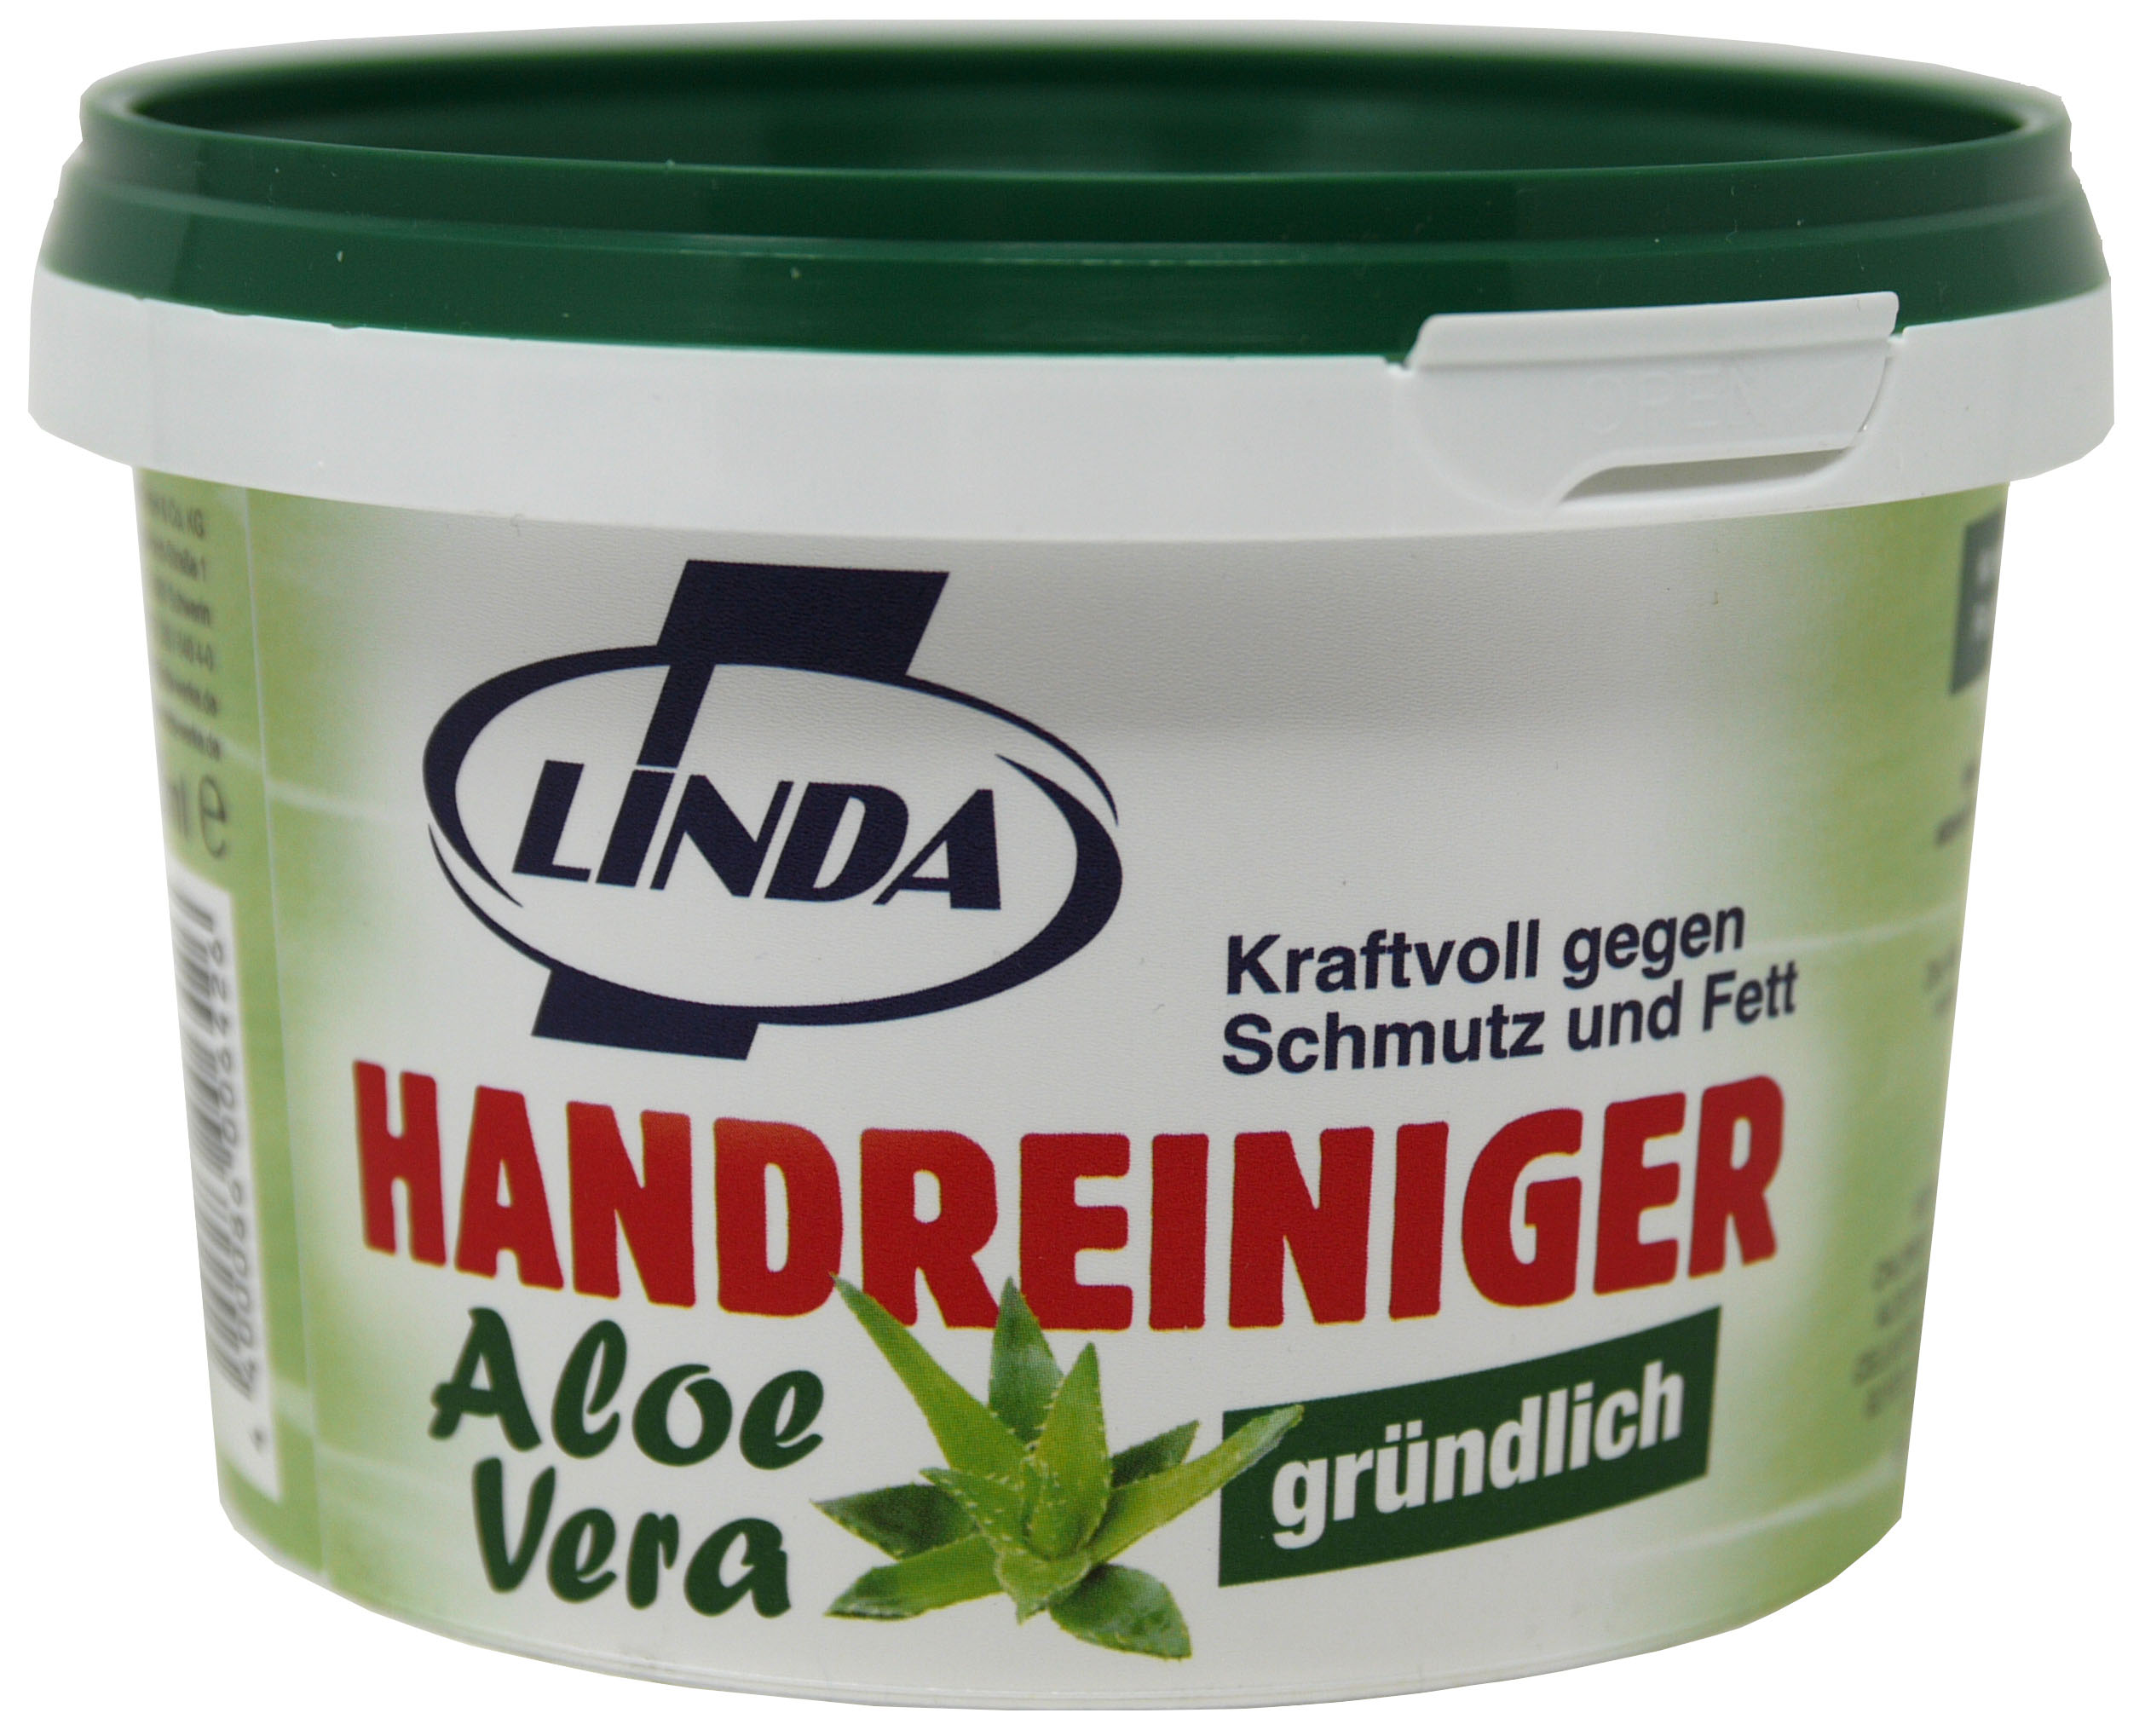 00604 - hand wash paste with aloe vera 500 ml 